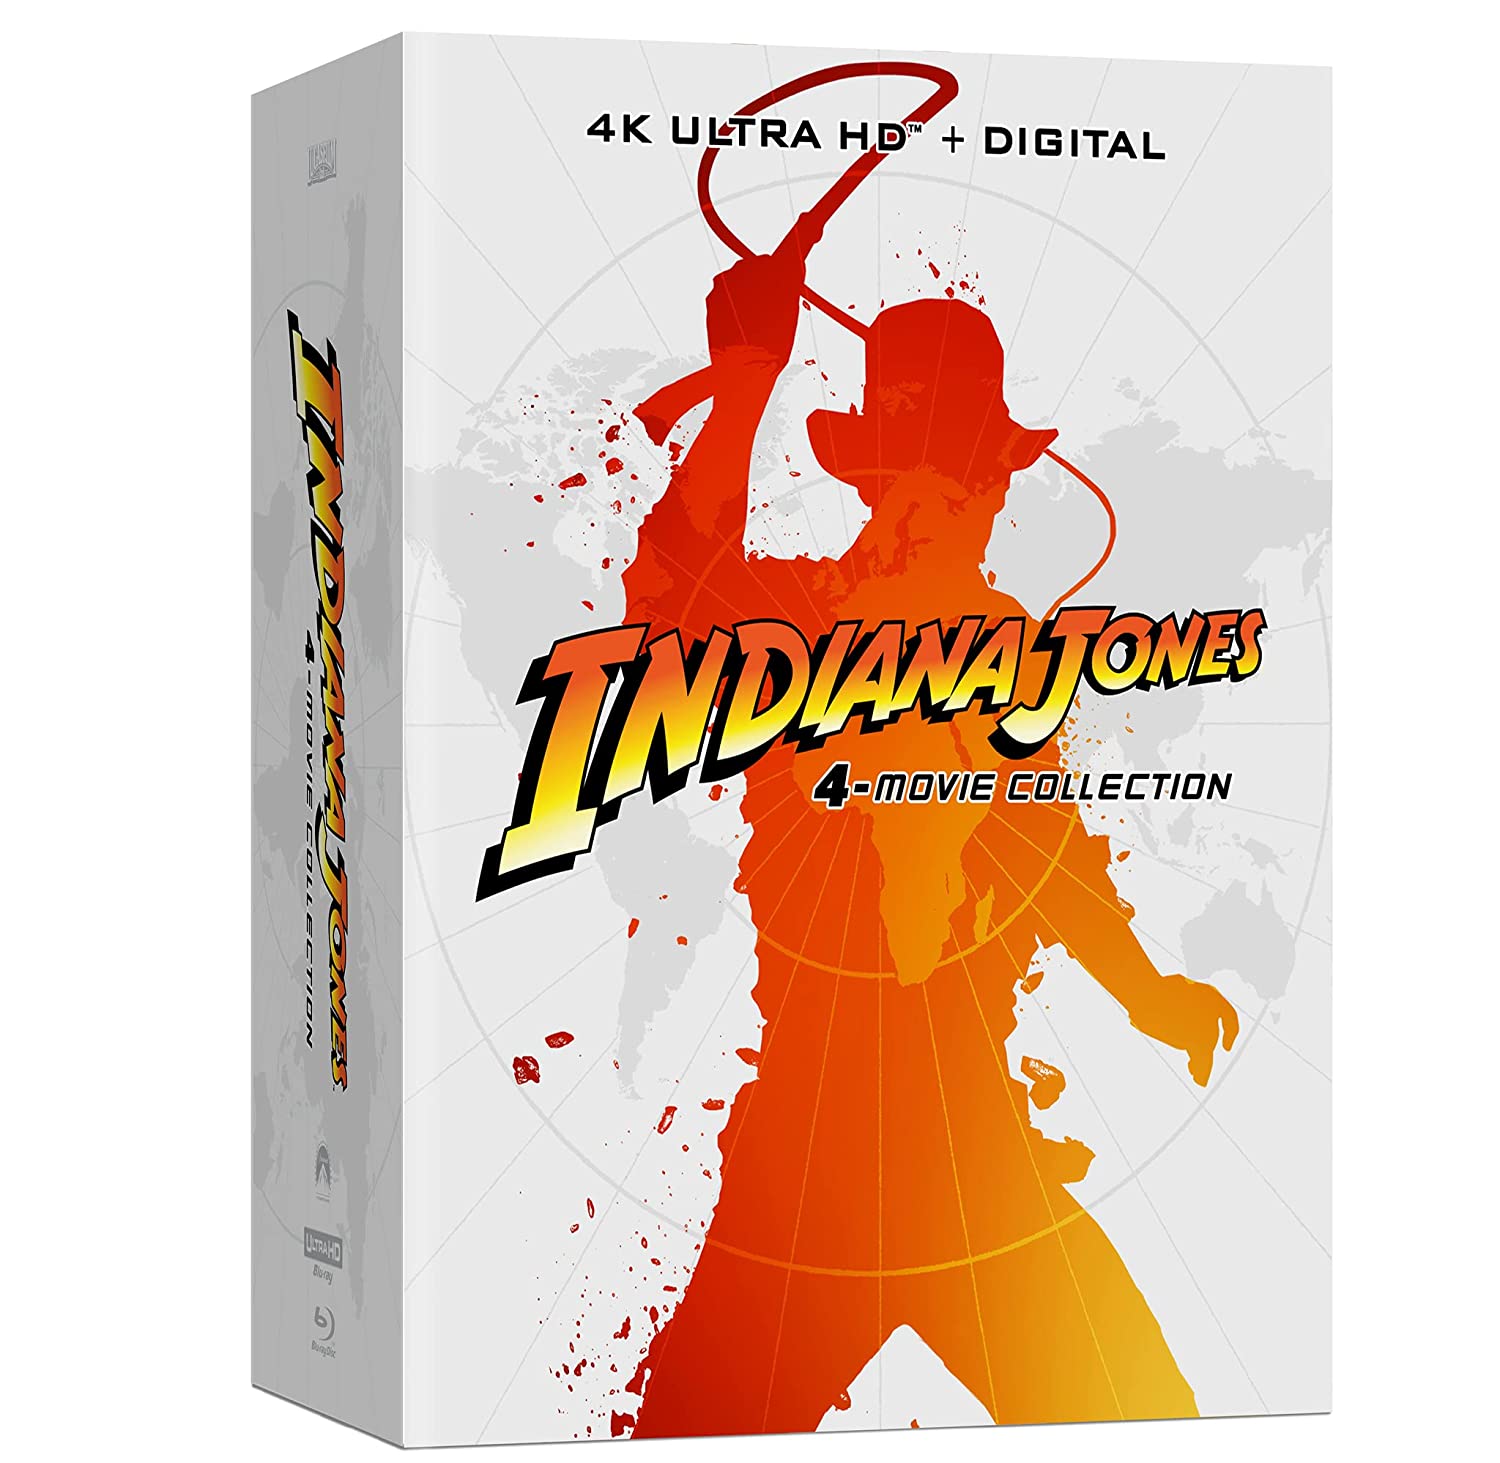 Indiana Jones 4 movie collection 4k blu-ray steelbook case